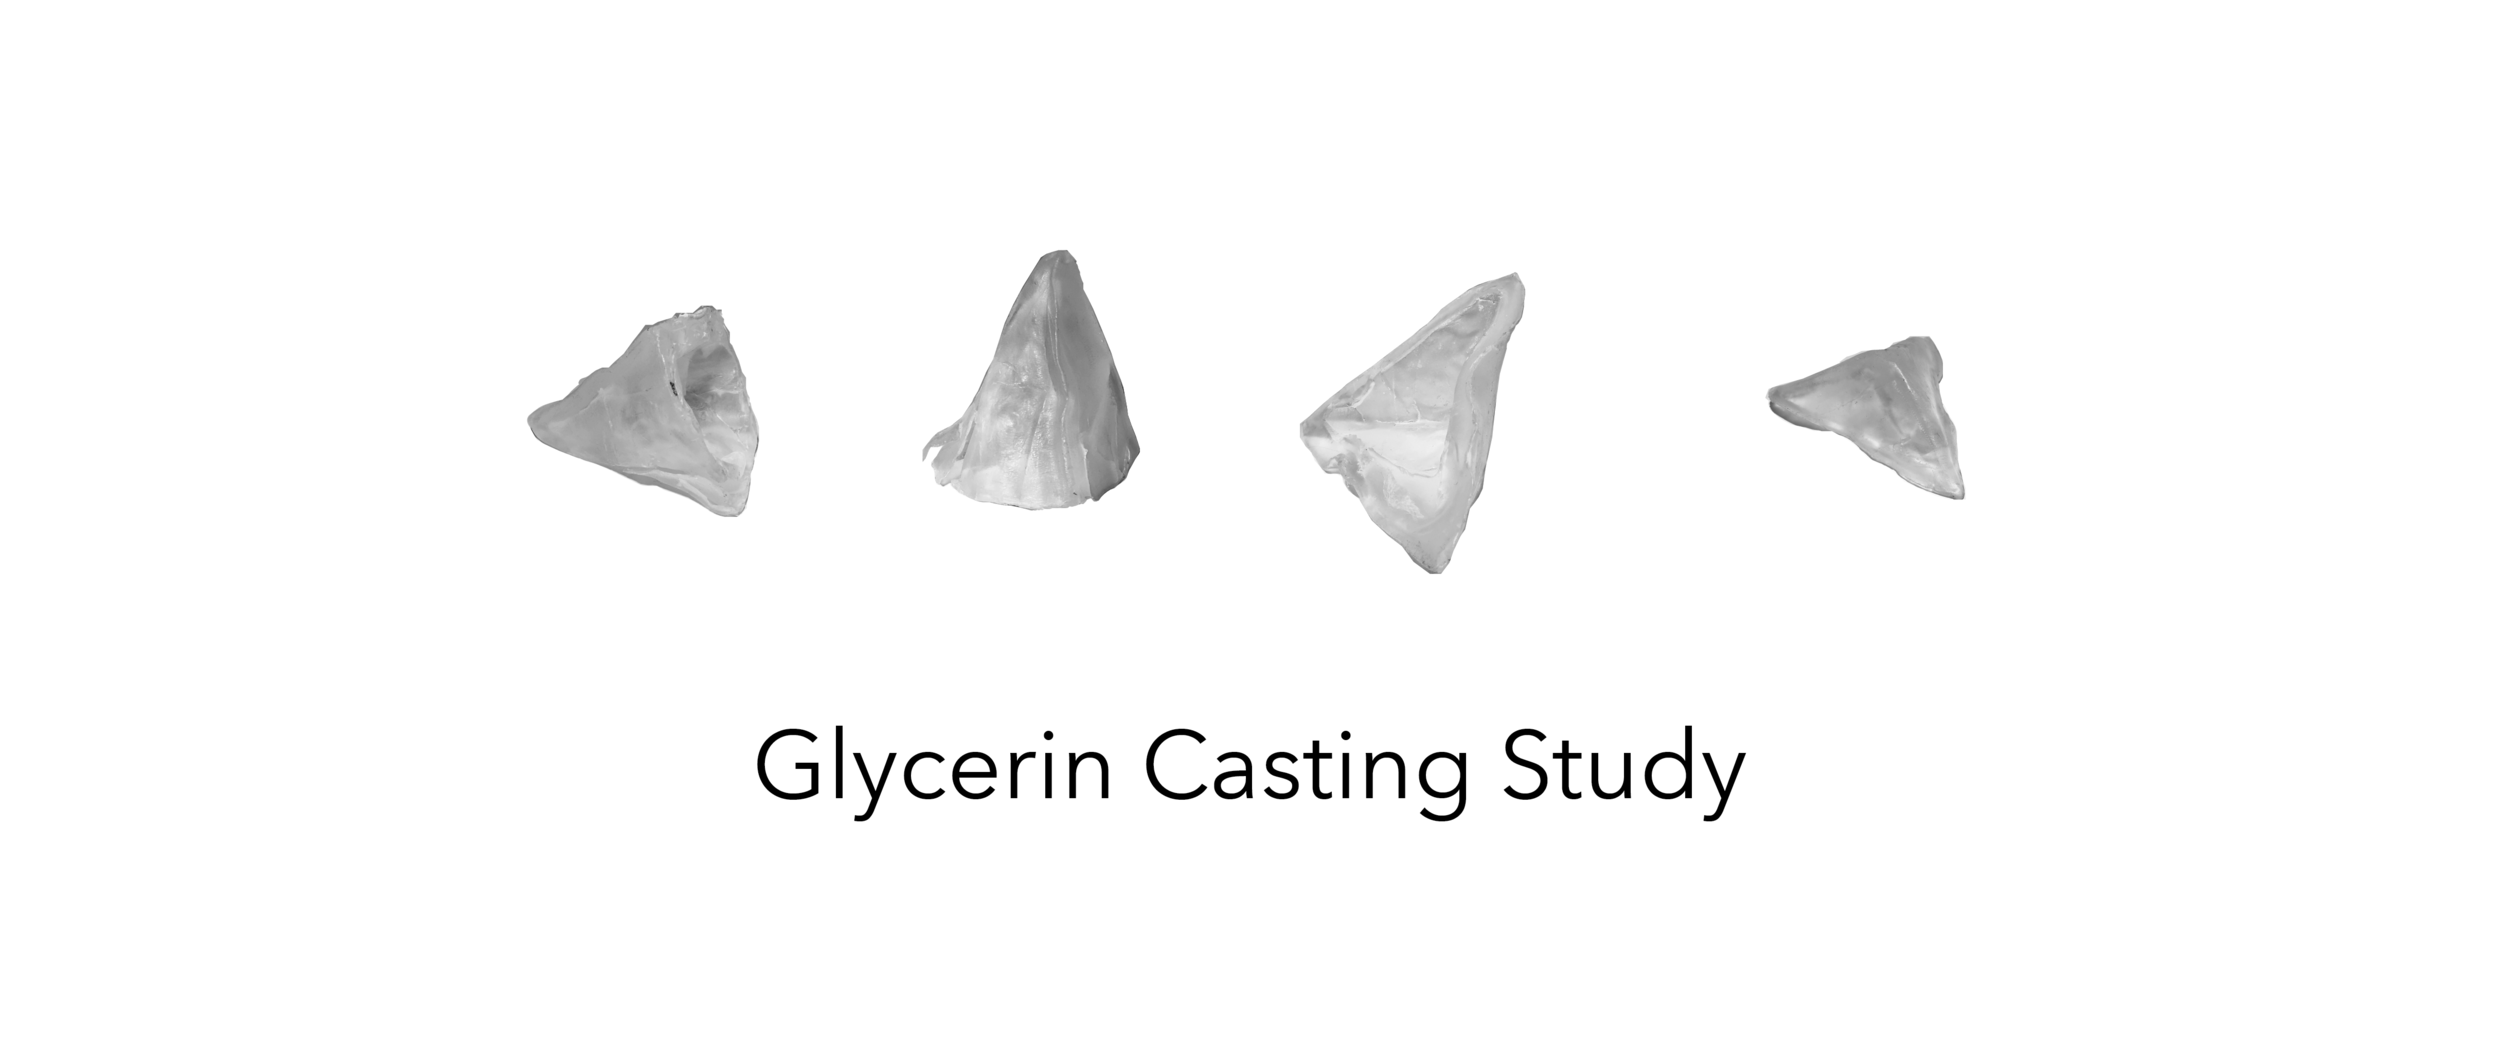 glycerin casting study b&w.png